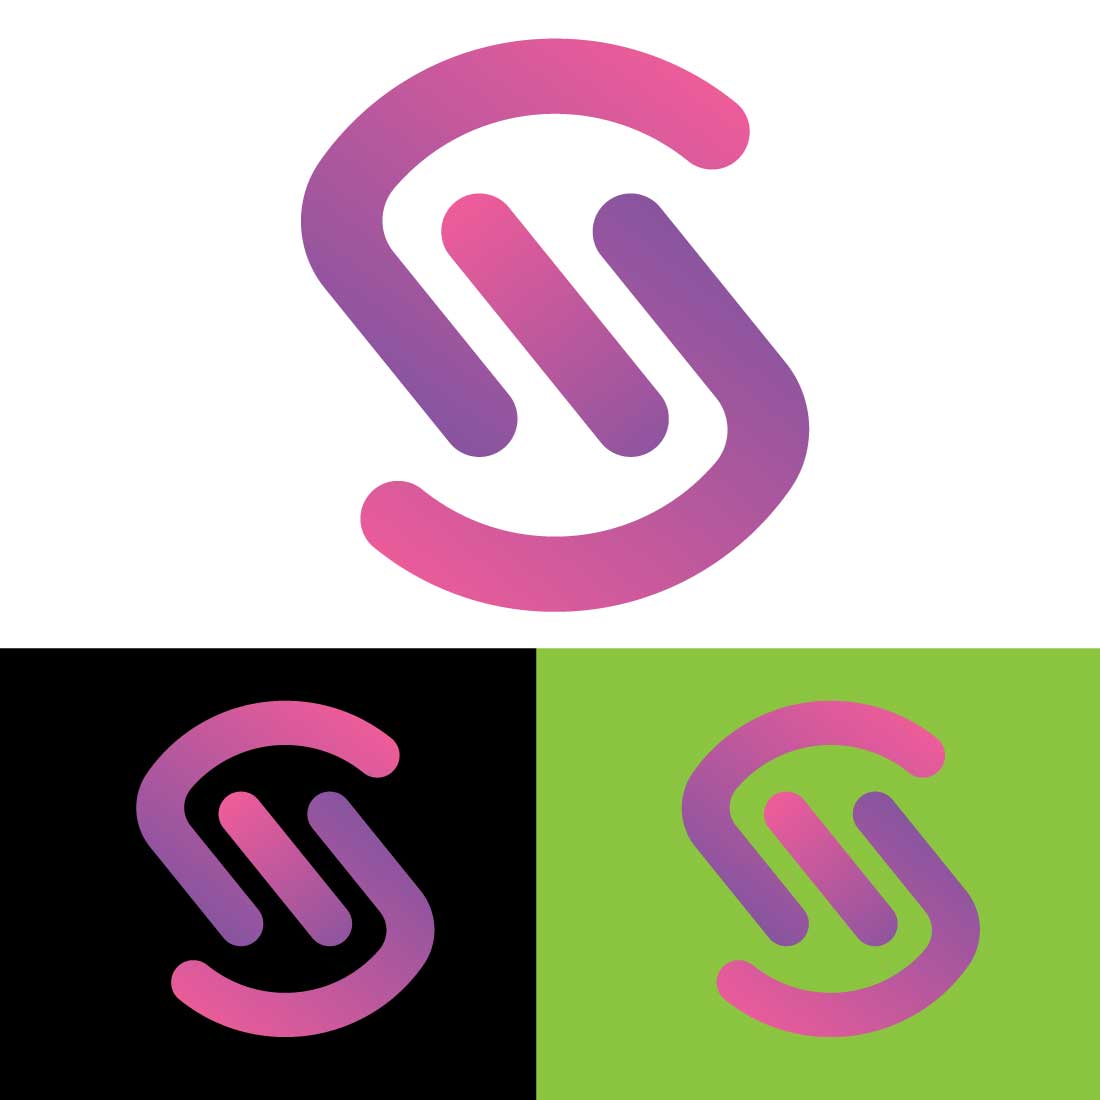 S logo design SVG/EPS/PNG preview image.